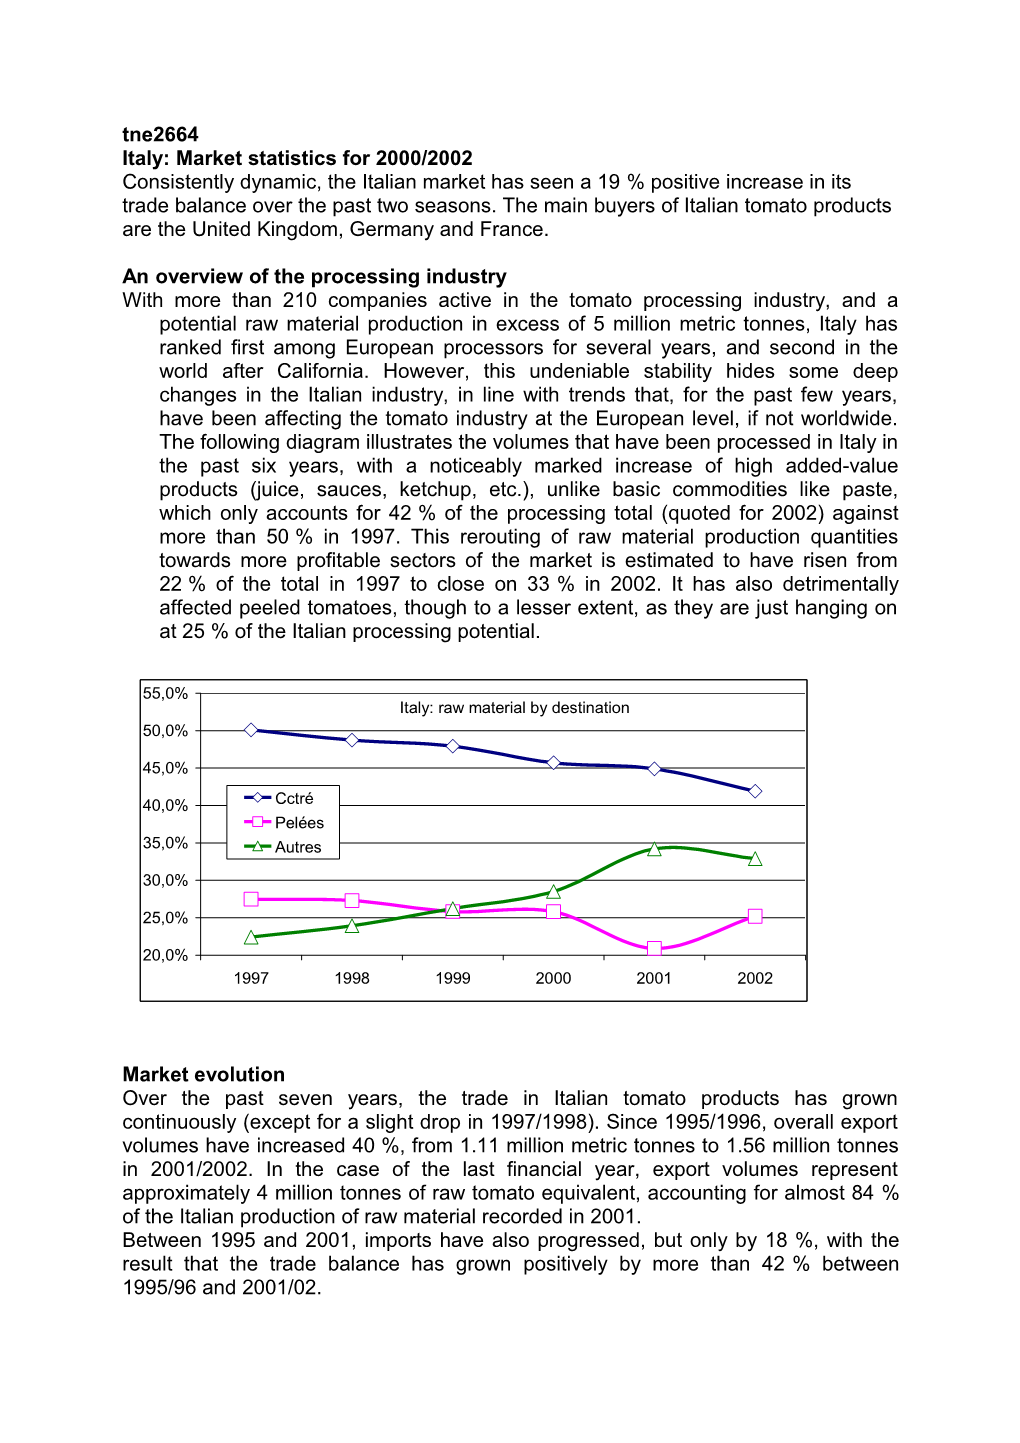 Italy: Market Statistics for 2000/2002